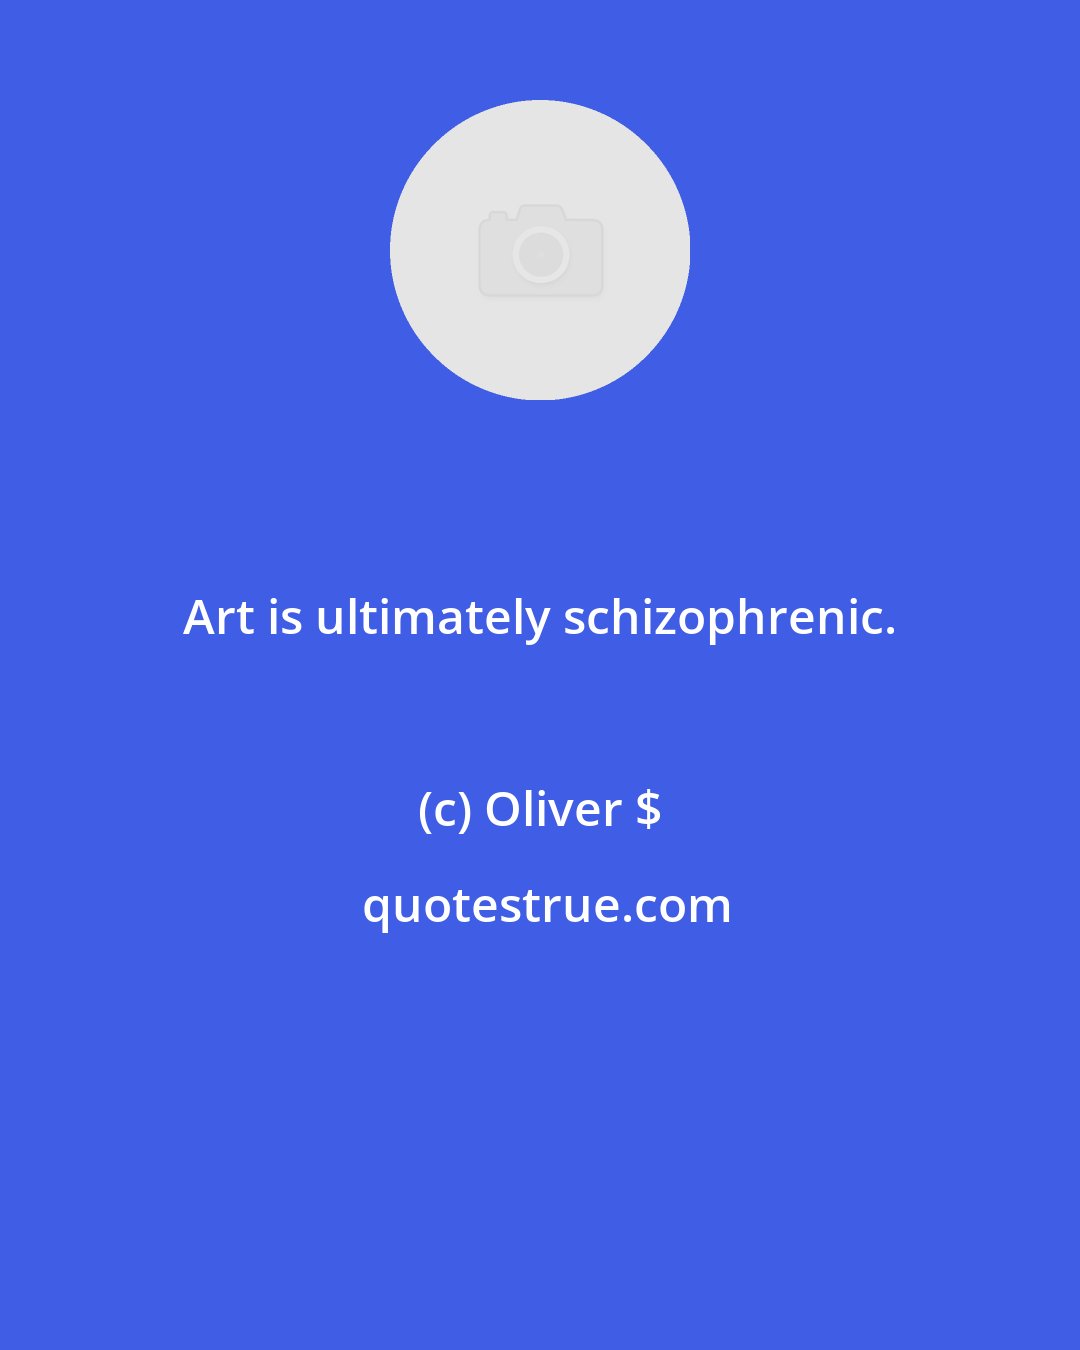 Oliver $: Art is ultimately schizophrenic.